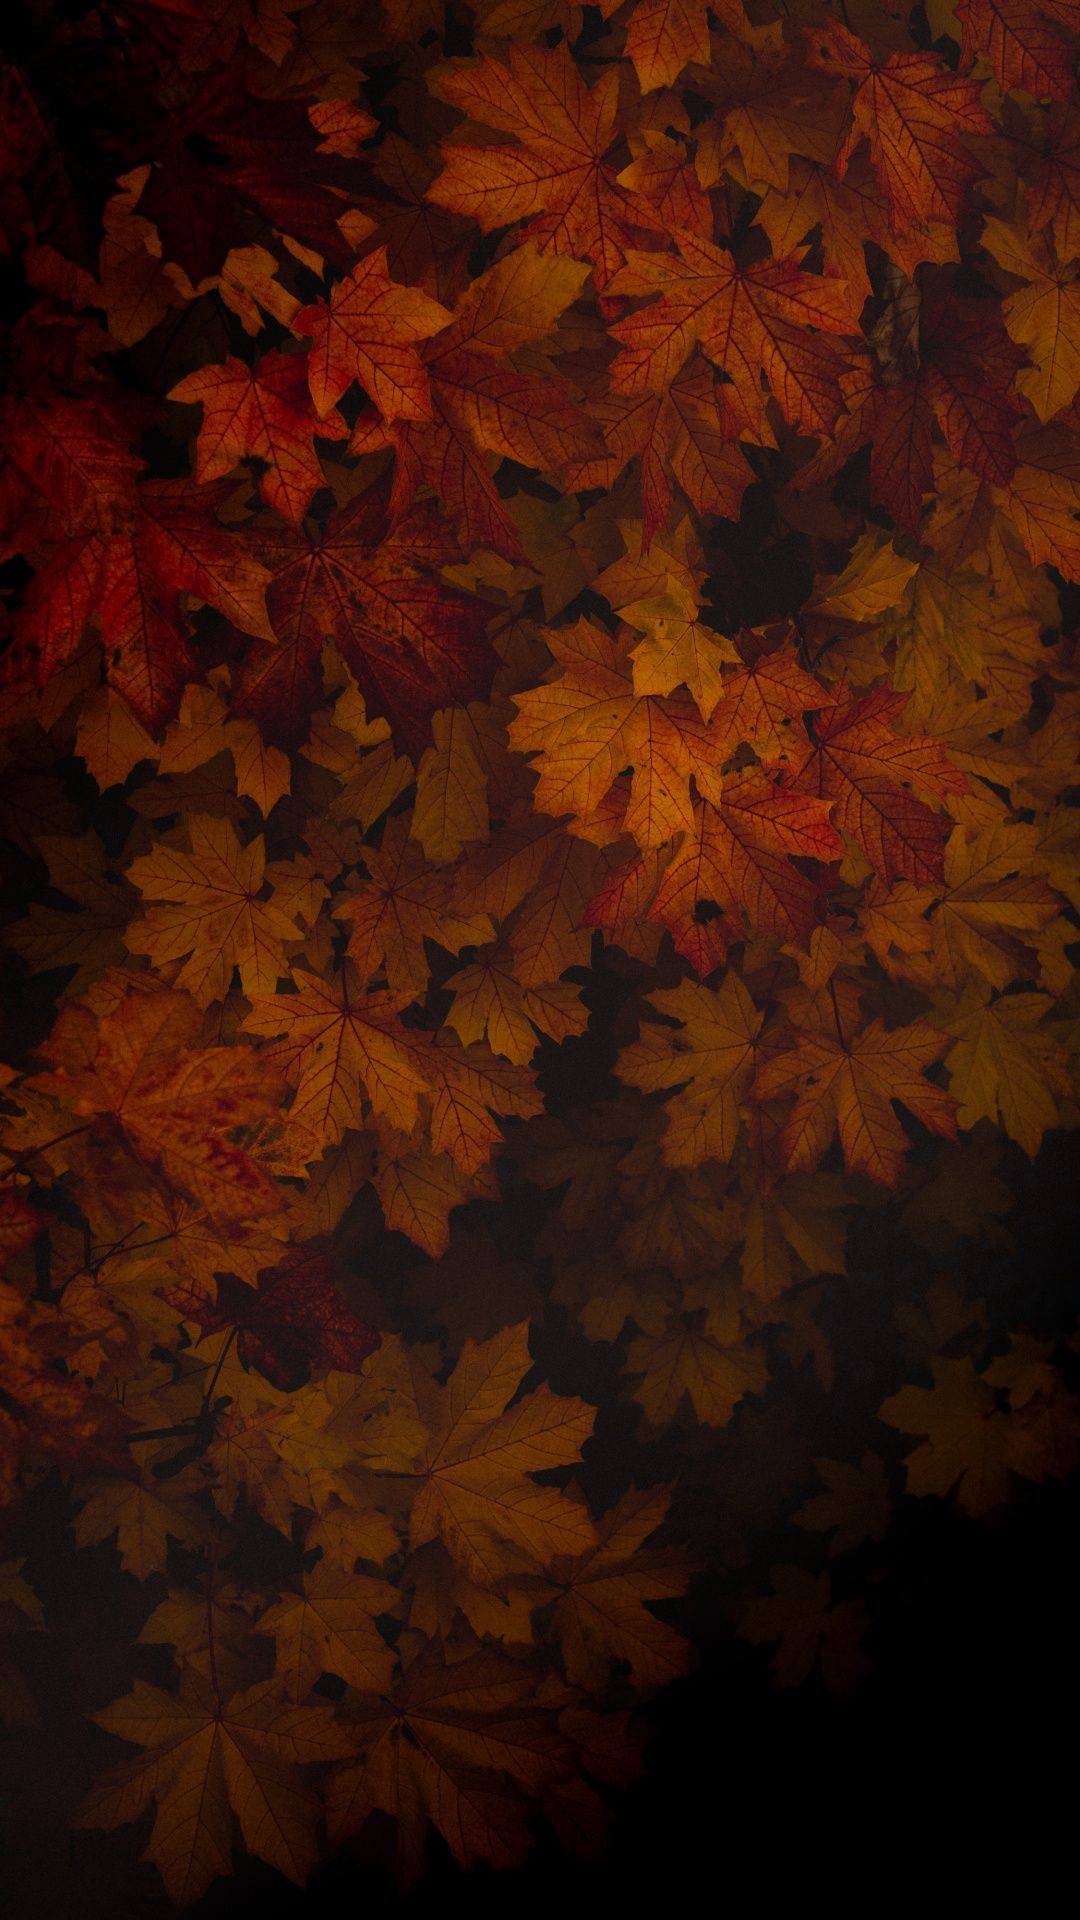 Autumn, foliage, portrait Wallpaper. Autumn phone wallpaper, Autumn leaves wallpaper, Leaves wallpaper iphone